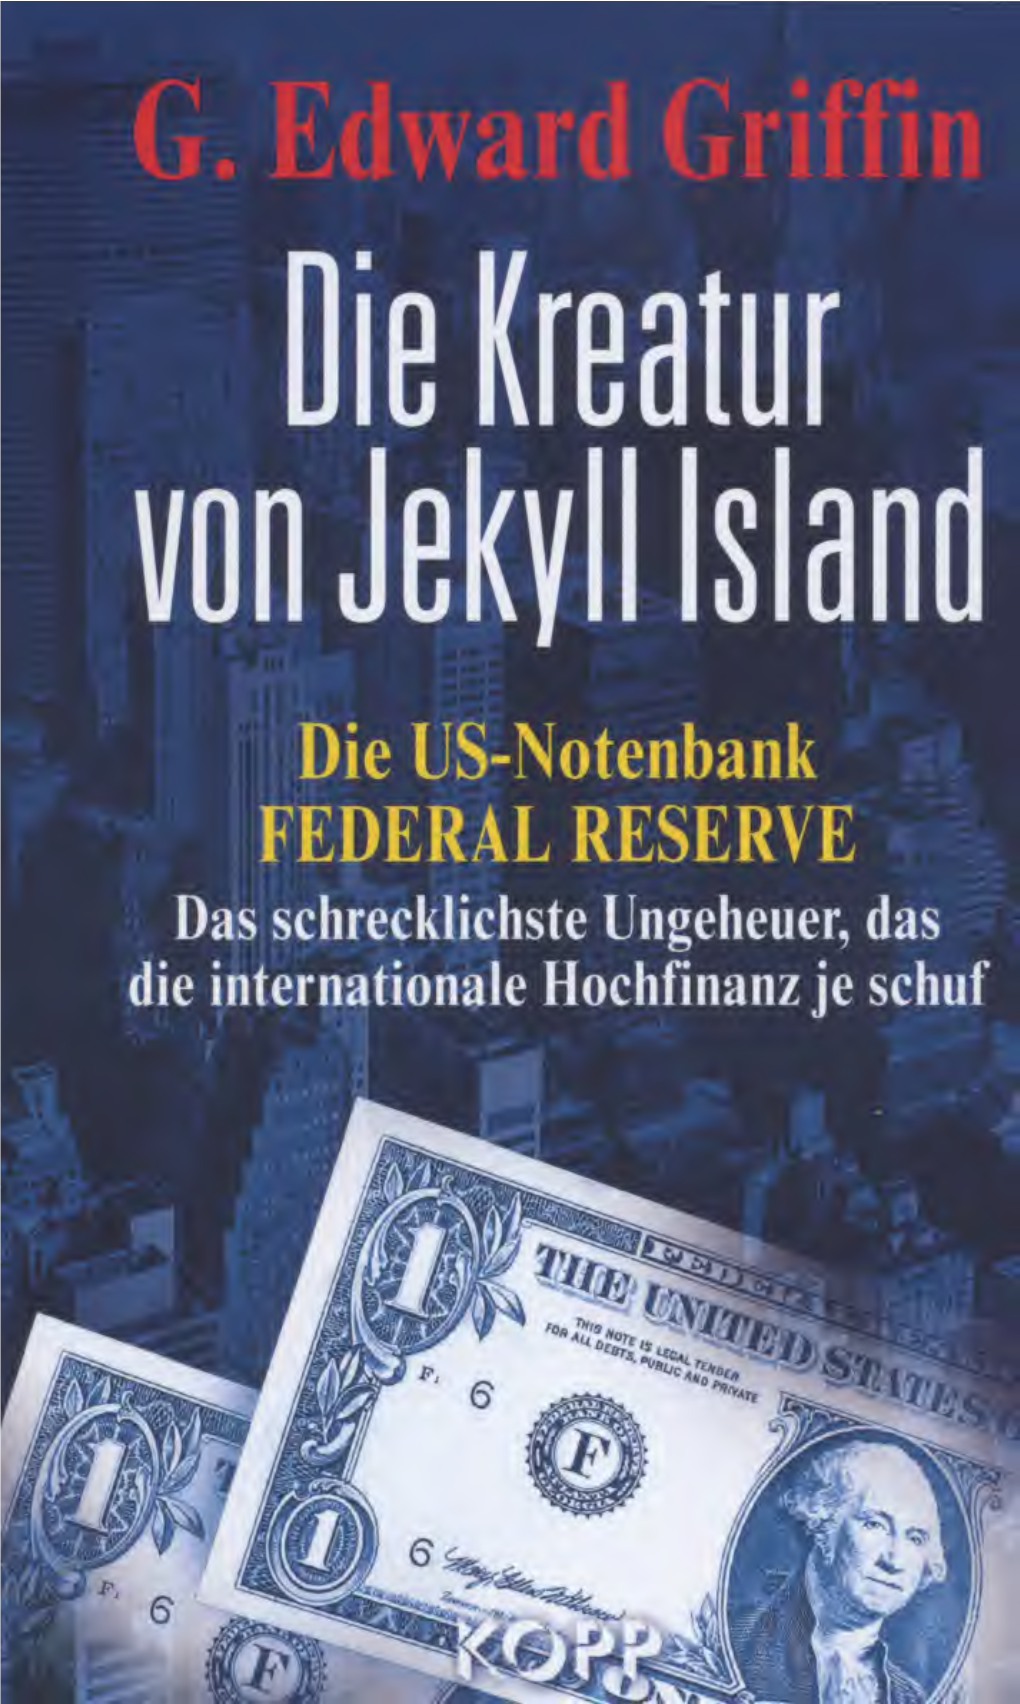 (FED Federal Reserve Bank) – G. Edward Griffin